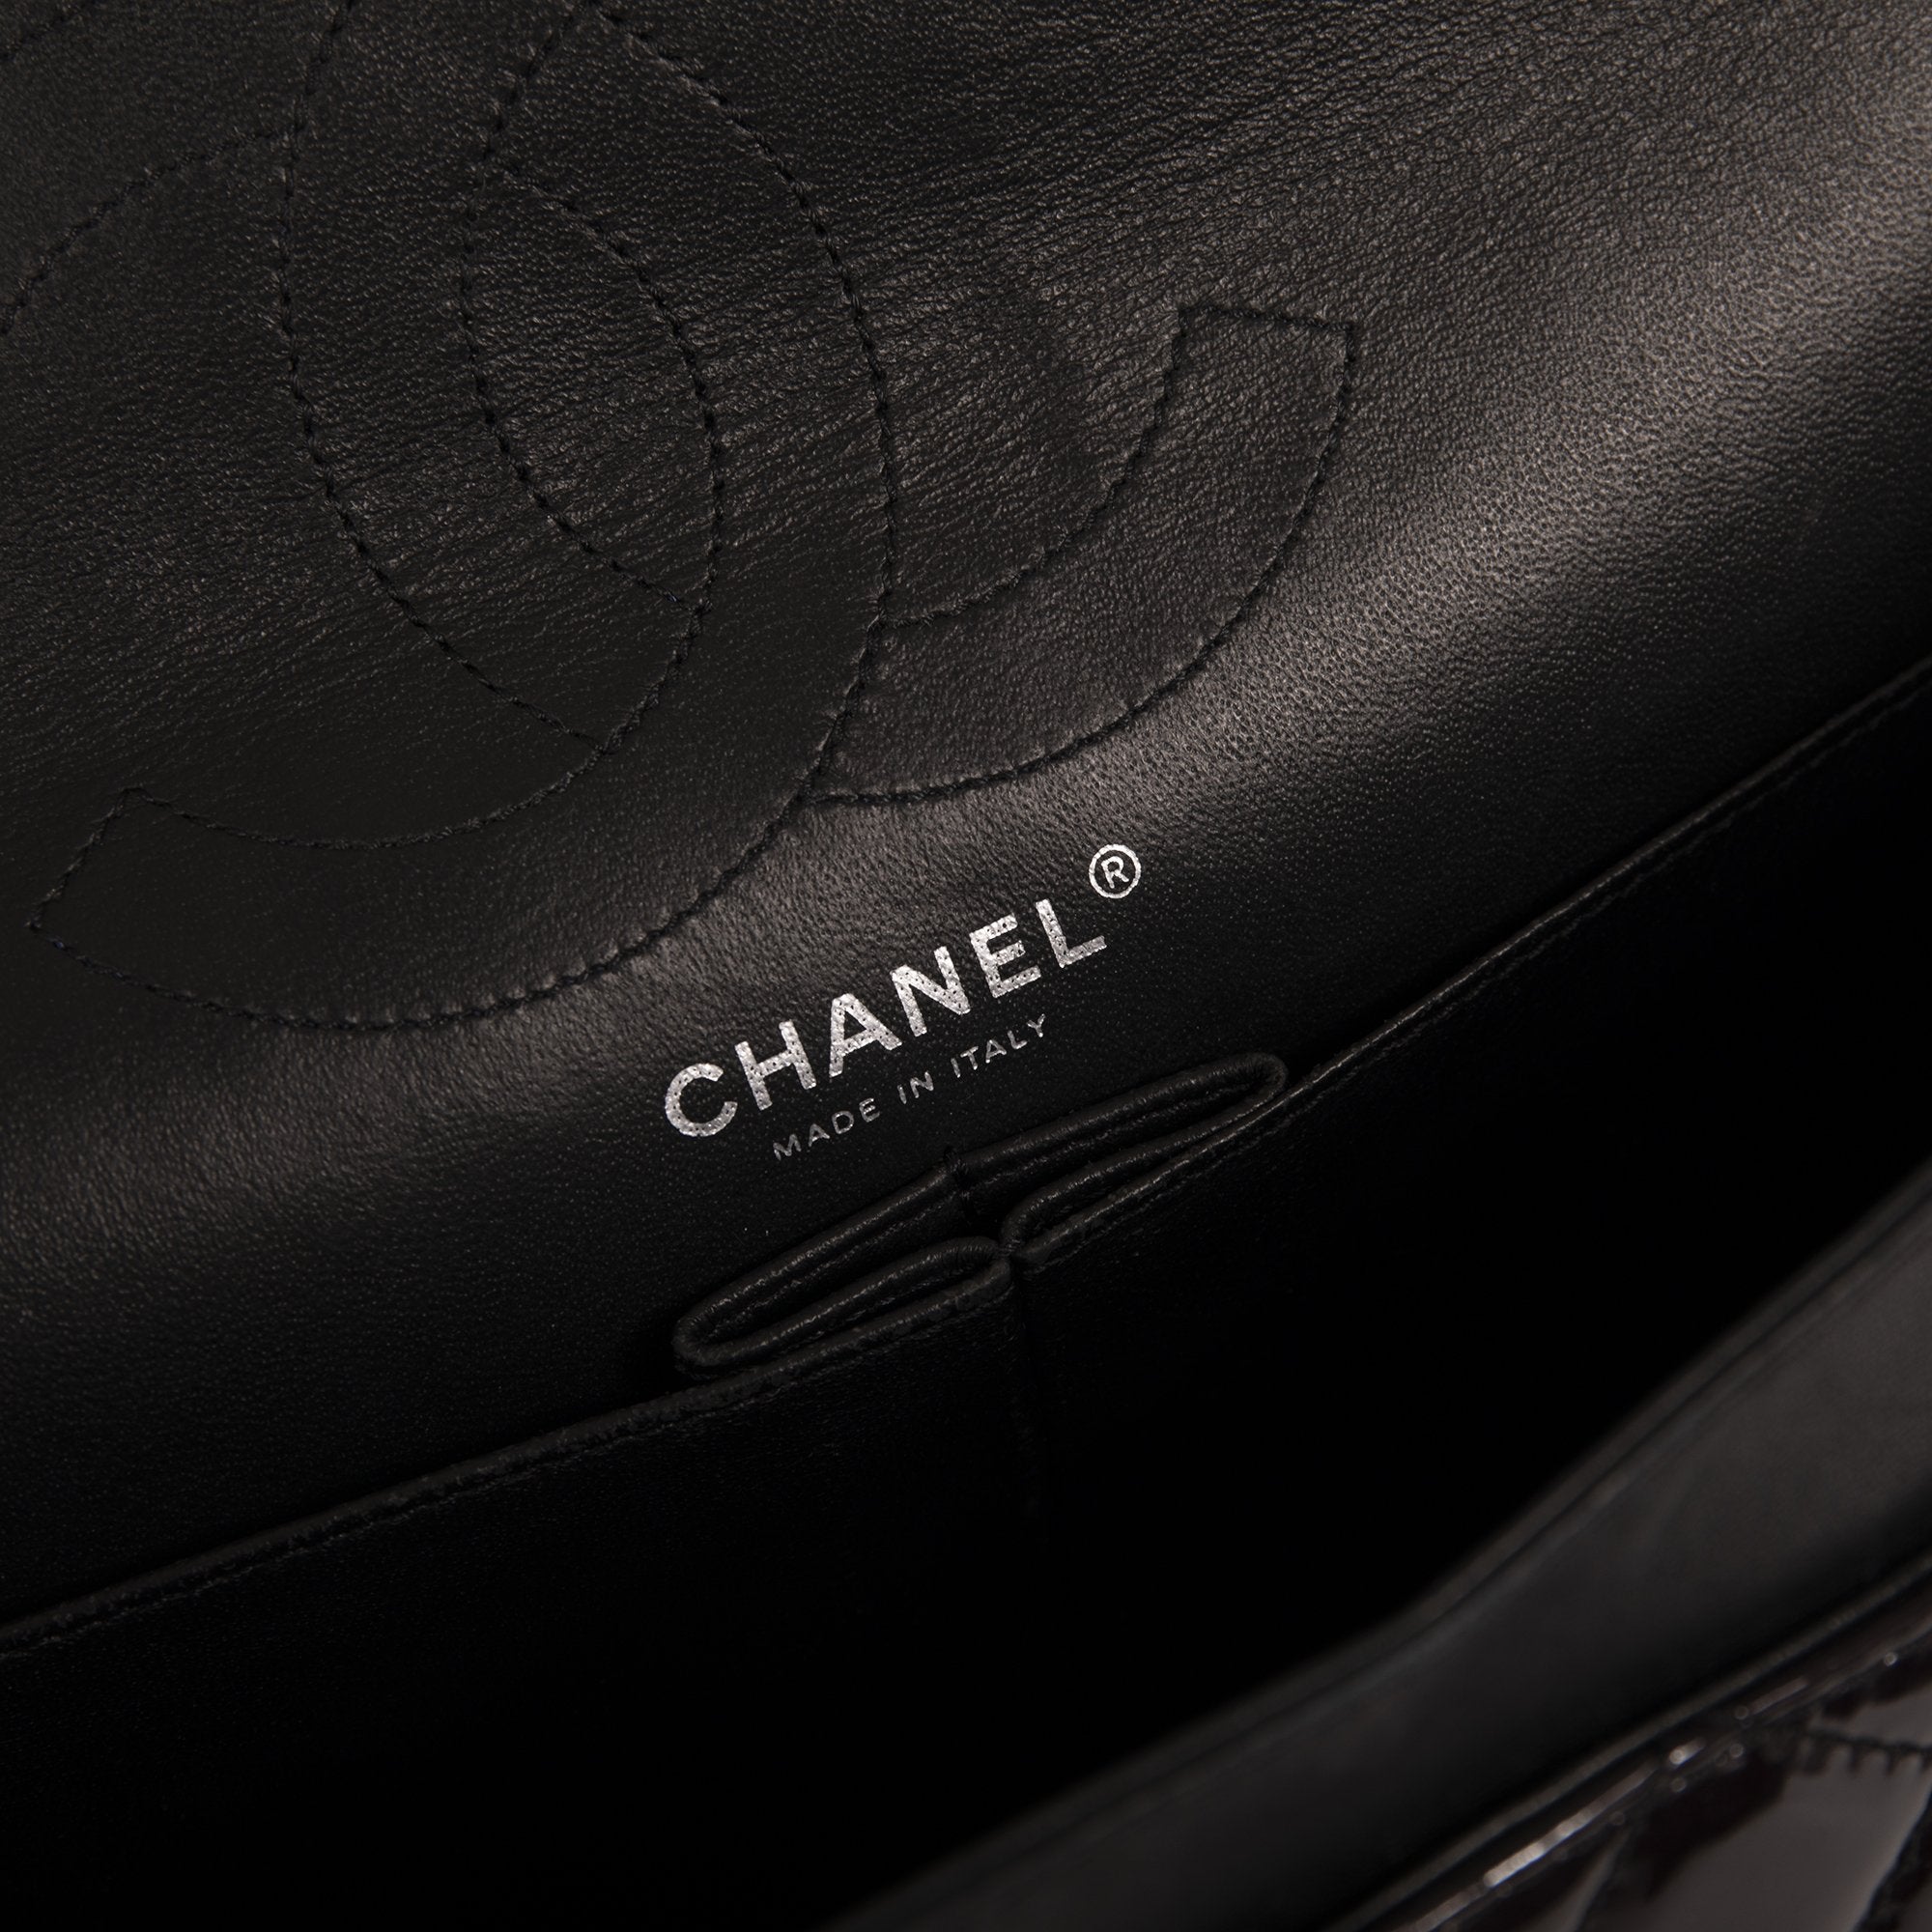 Chanel Blue Metallic Reissue 226 Double Flap Bag